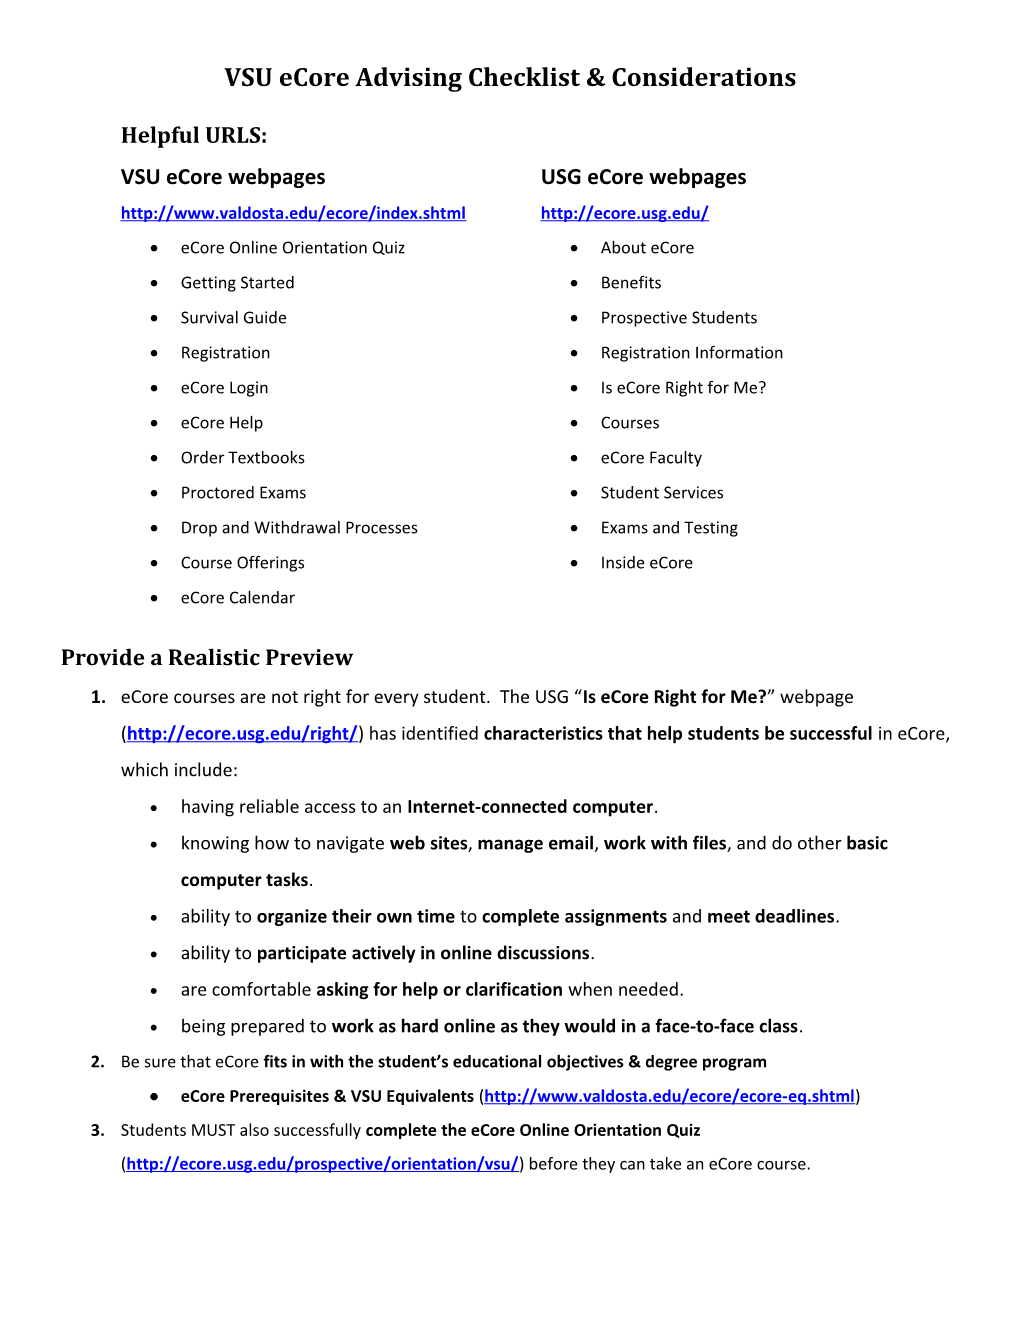 VSU Ecore Advising Checklist & Considerations